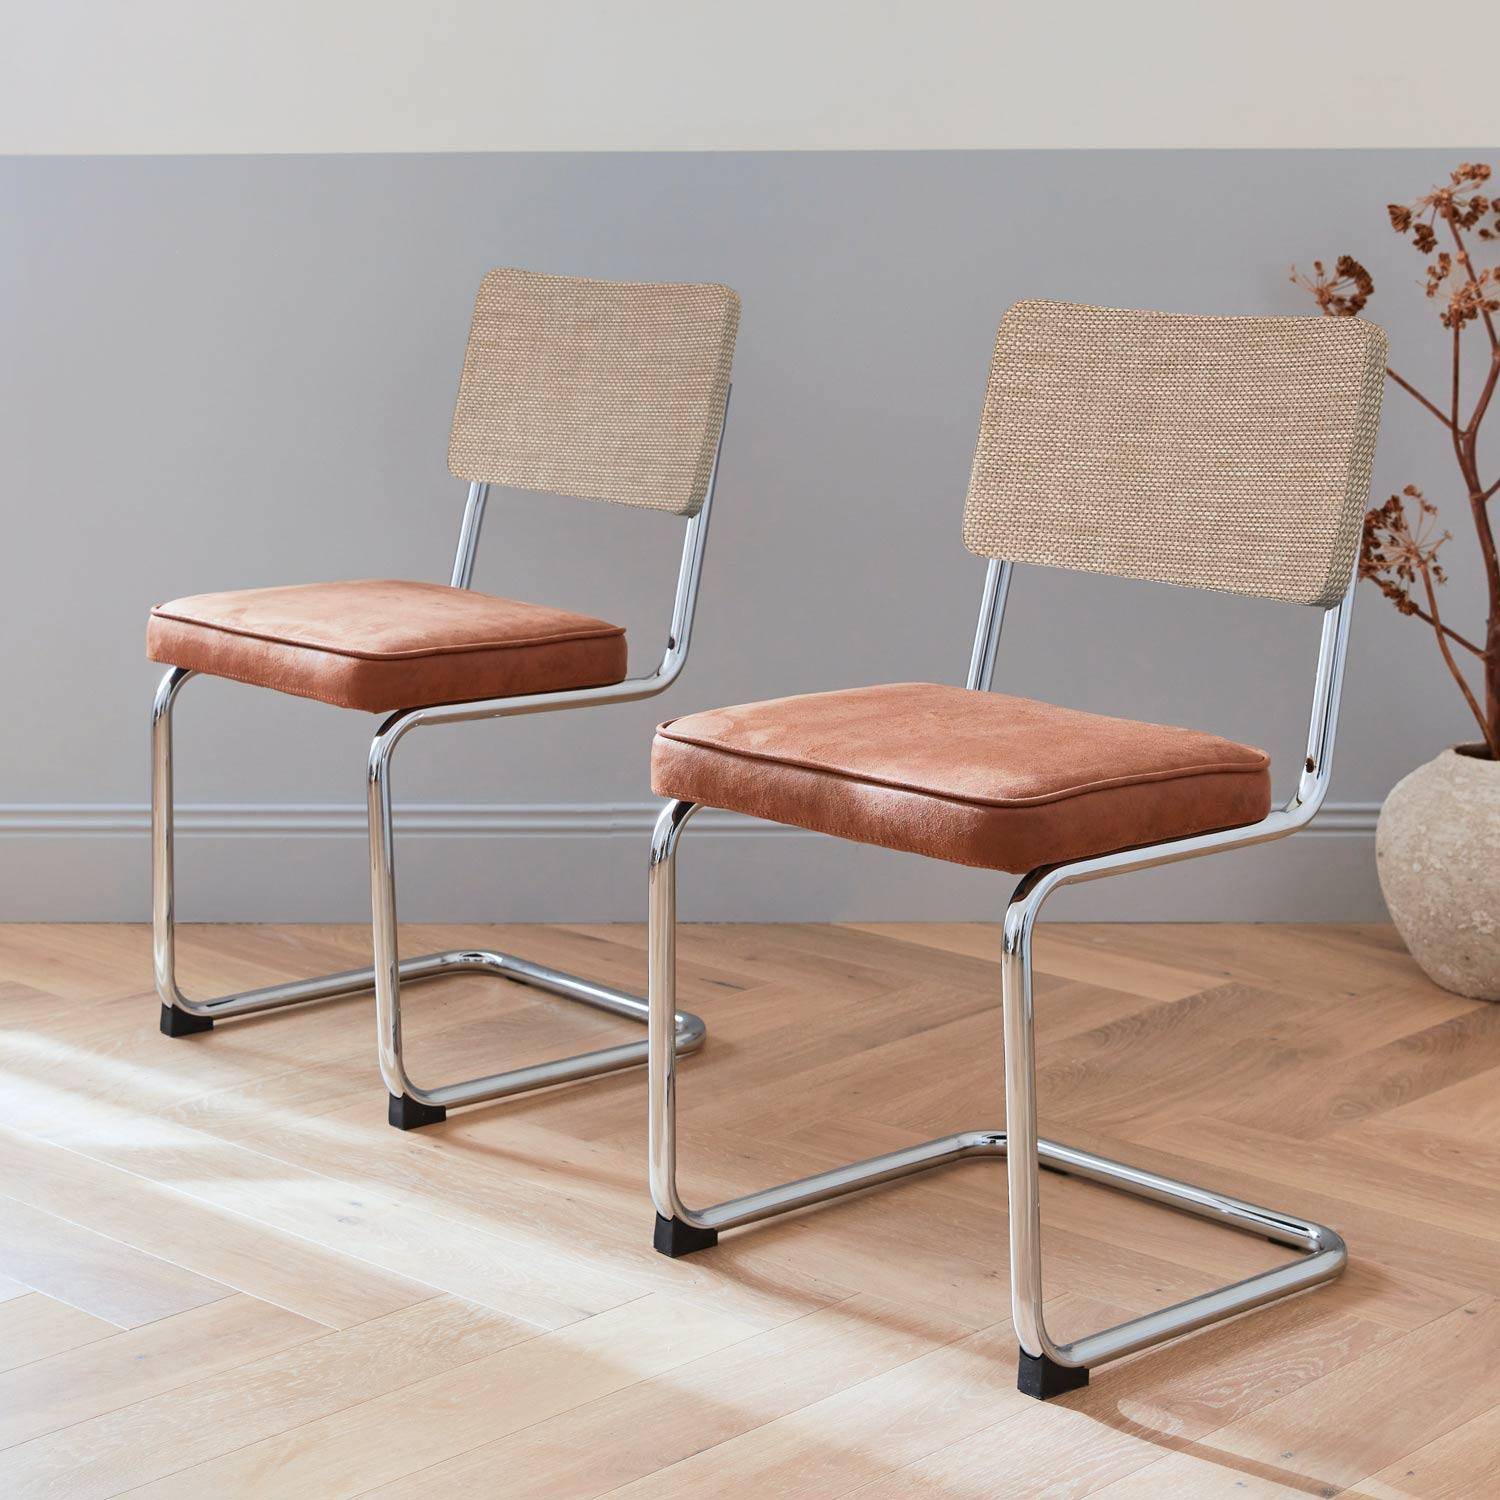 2 sillas cantilever - Maja - tela marrón claro y resina efecto ratán, 46 x 54,5 x 84,5cm  ,sweeek,Photo1